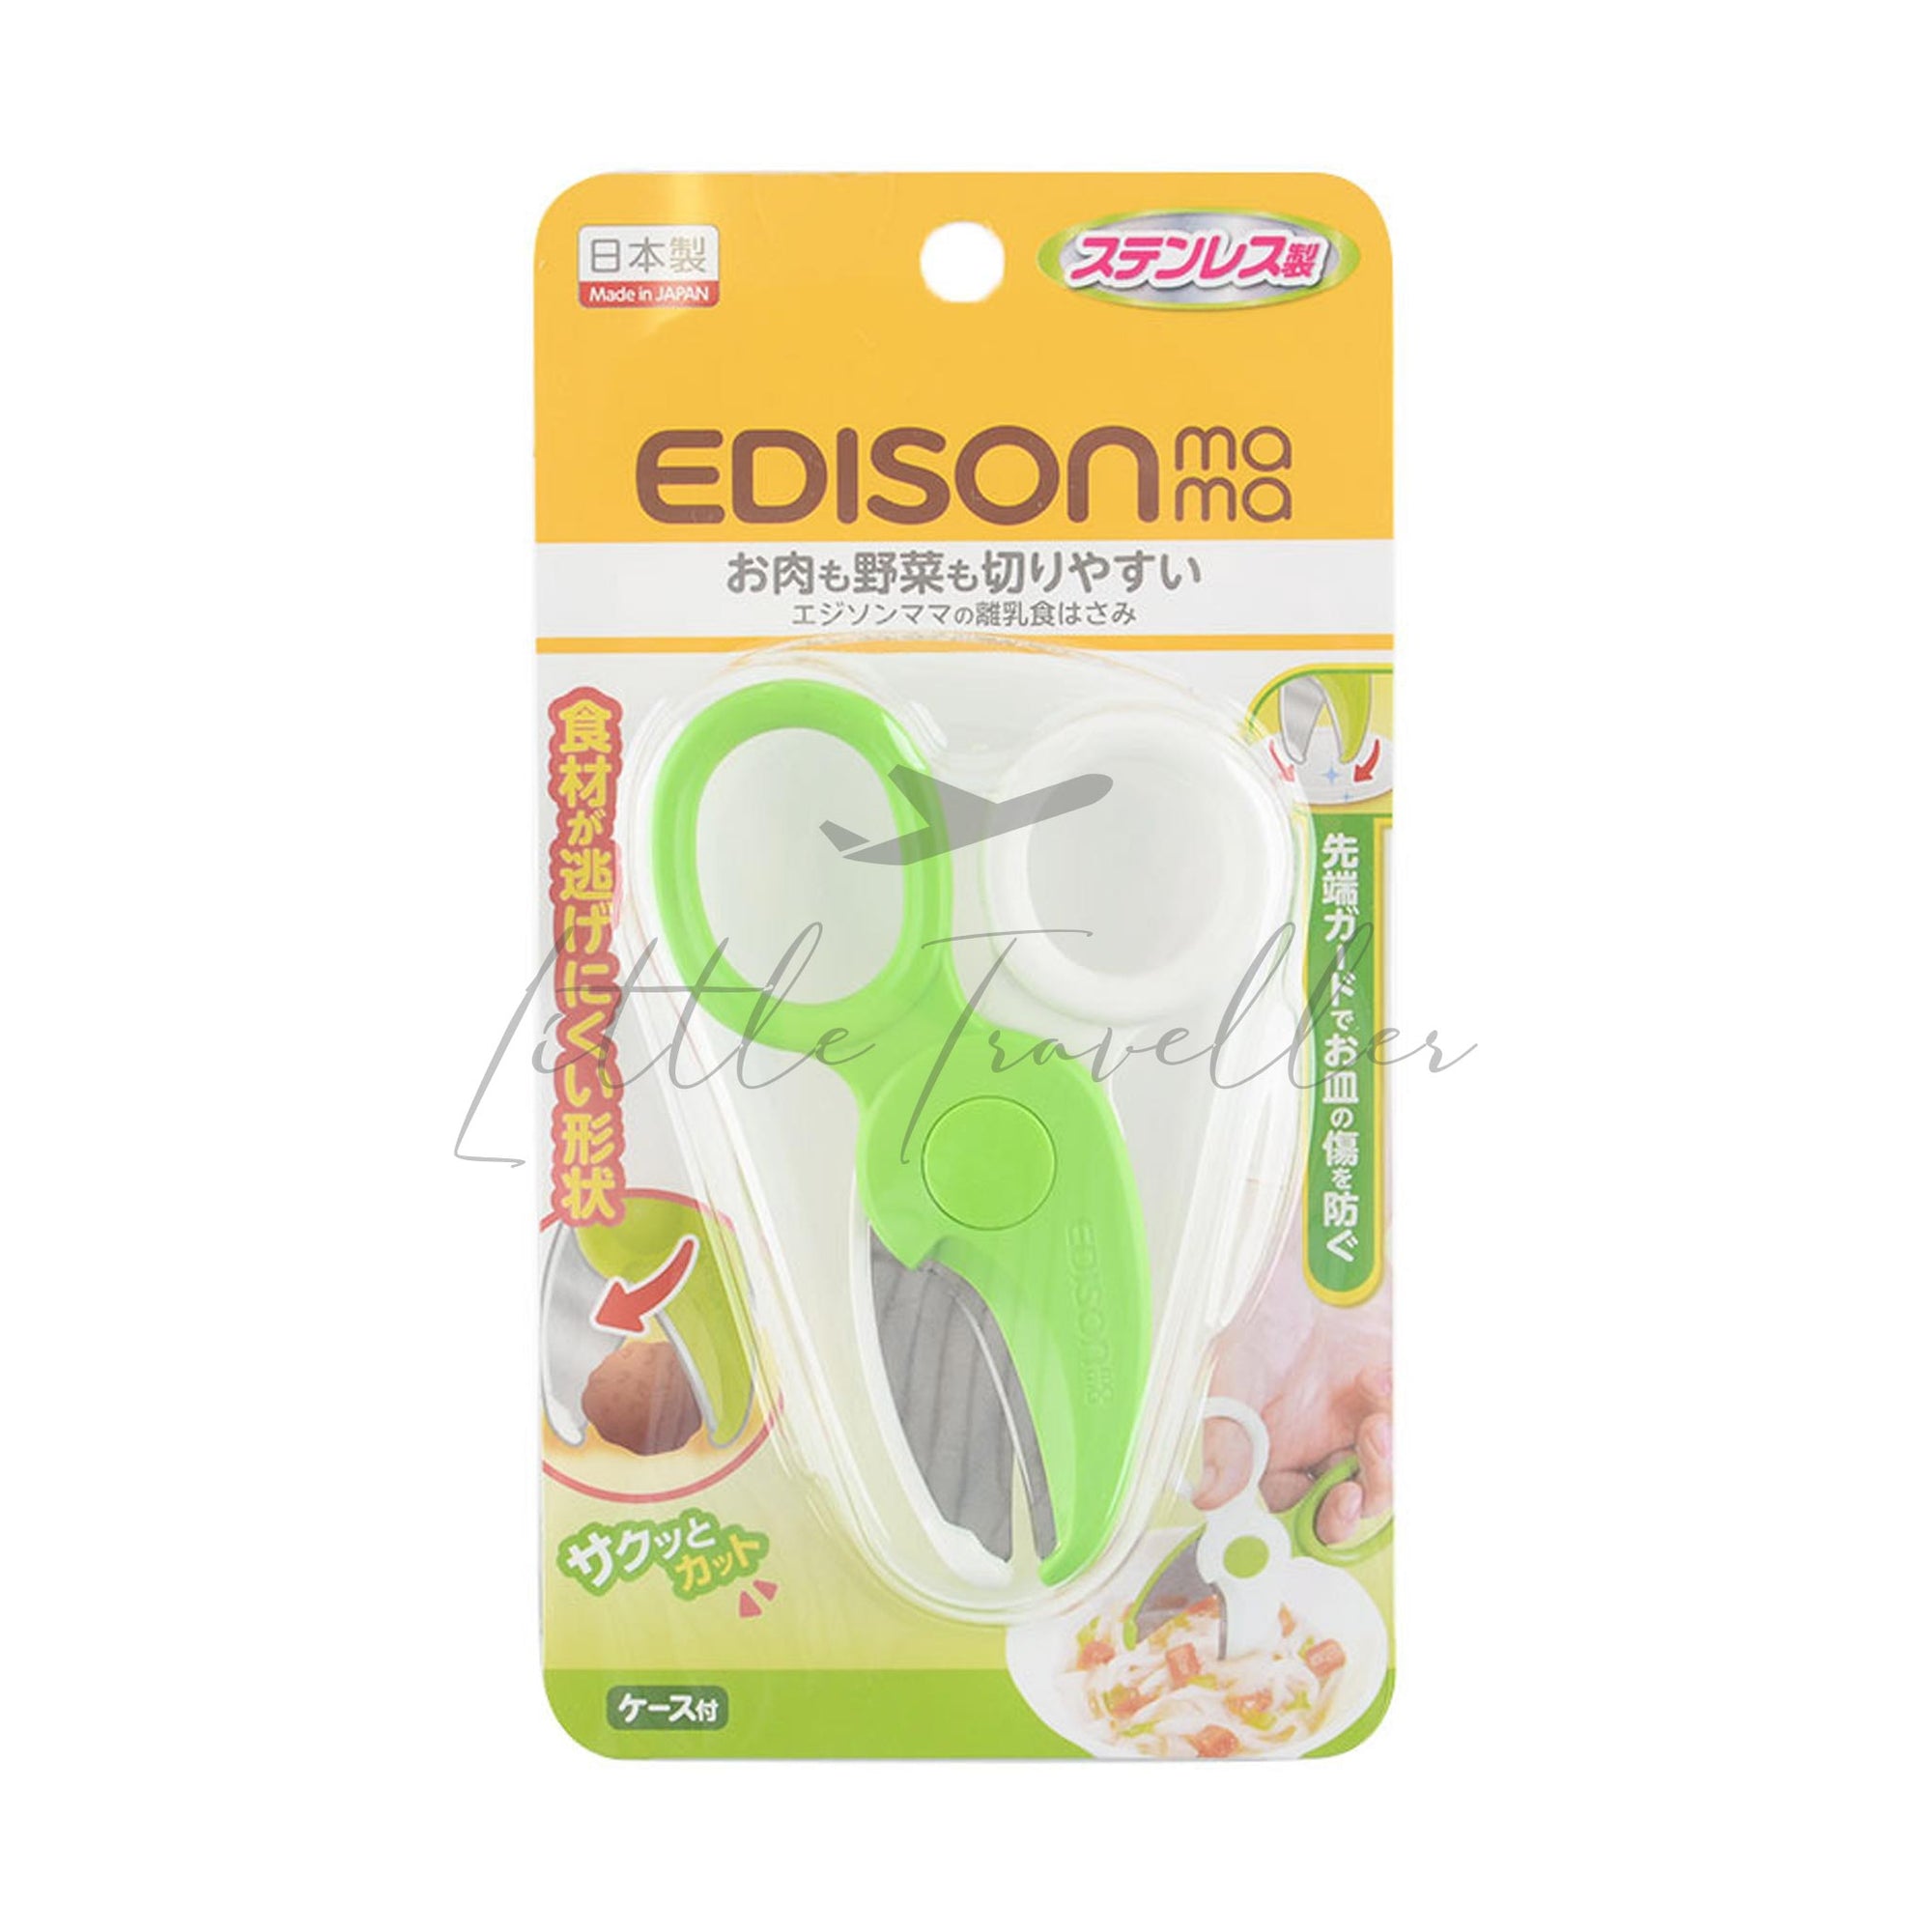 Edison Mama Food Scissors